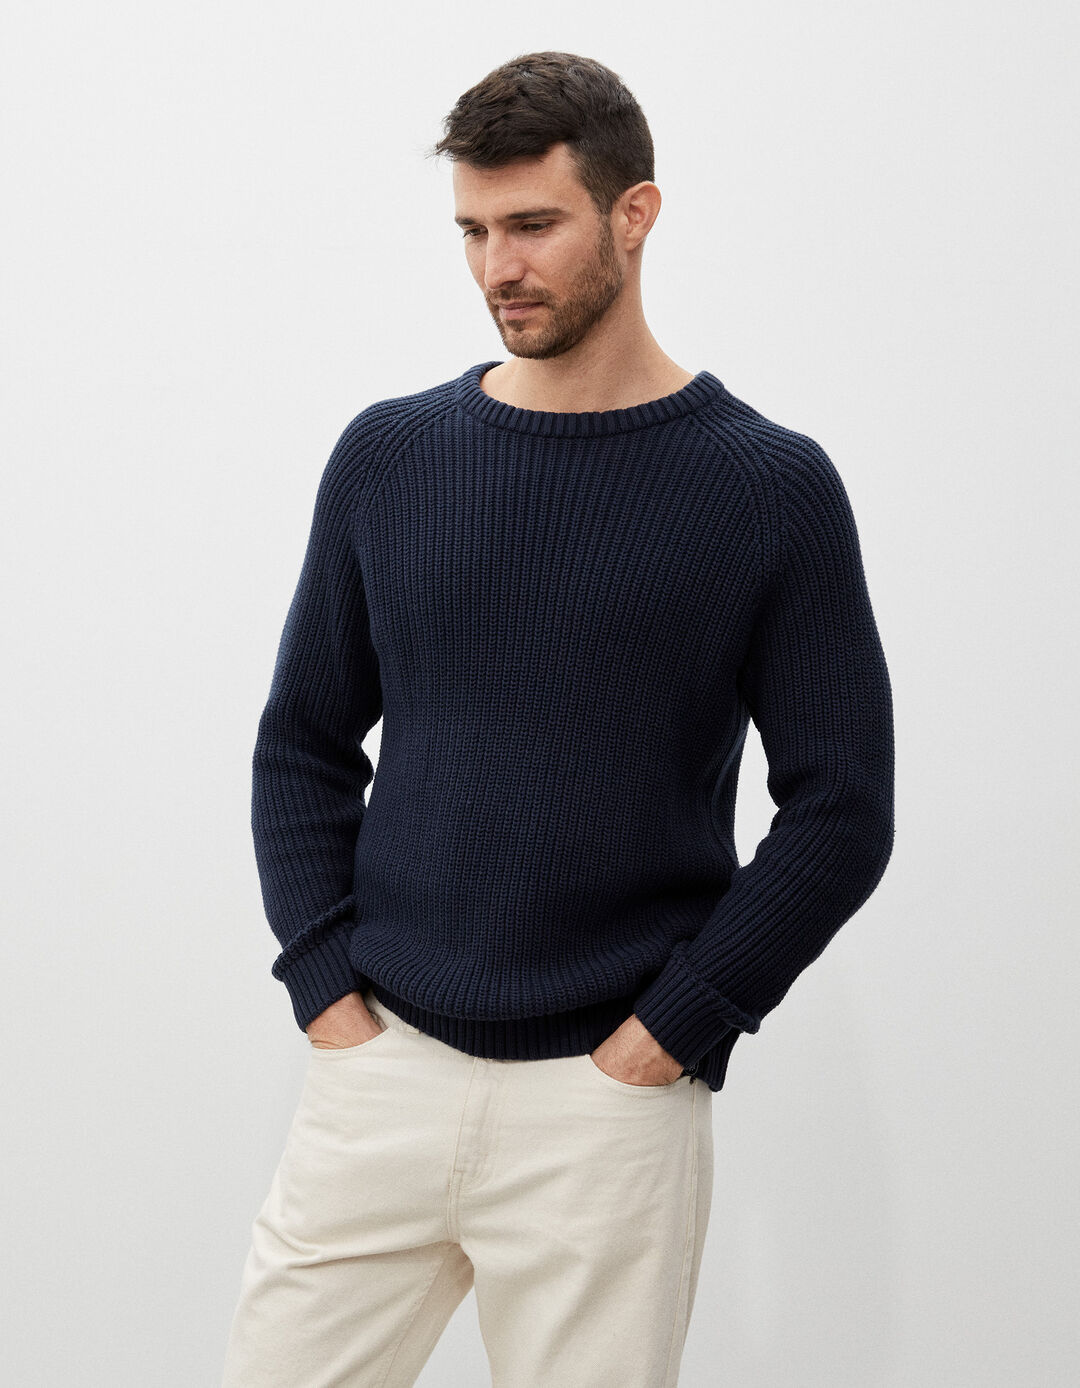 Ribbed Knit Sweater, Men, Dark Blue